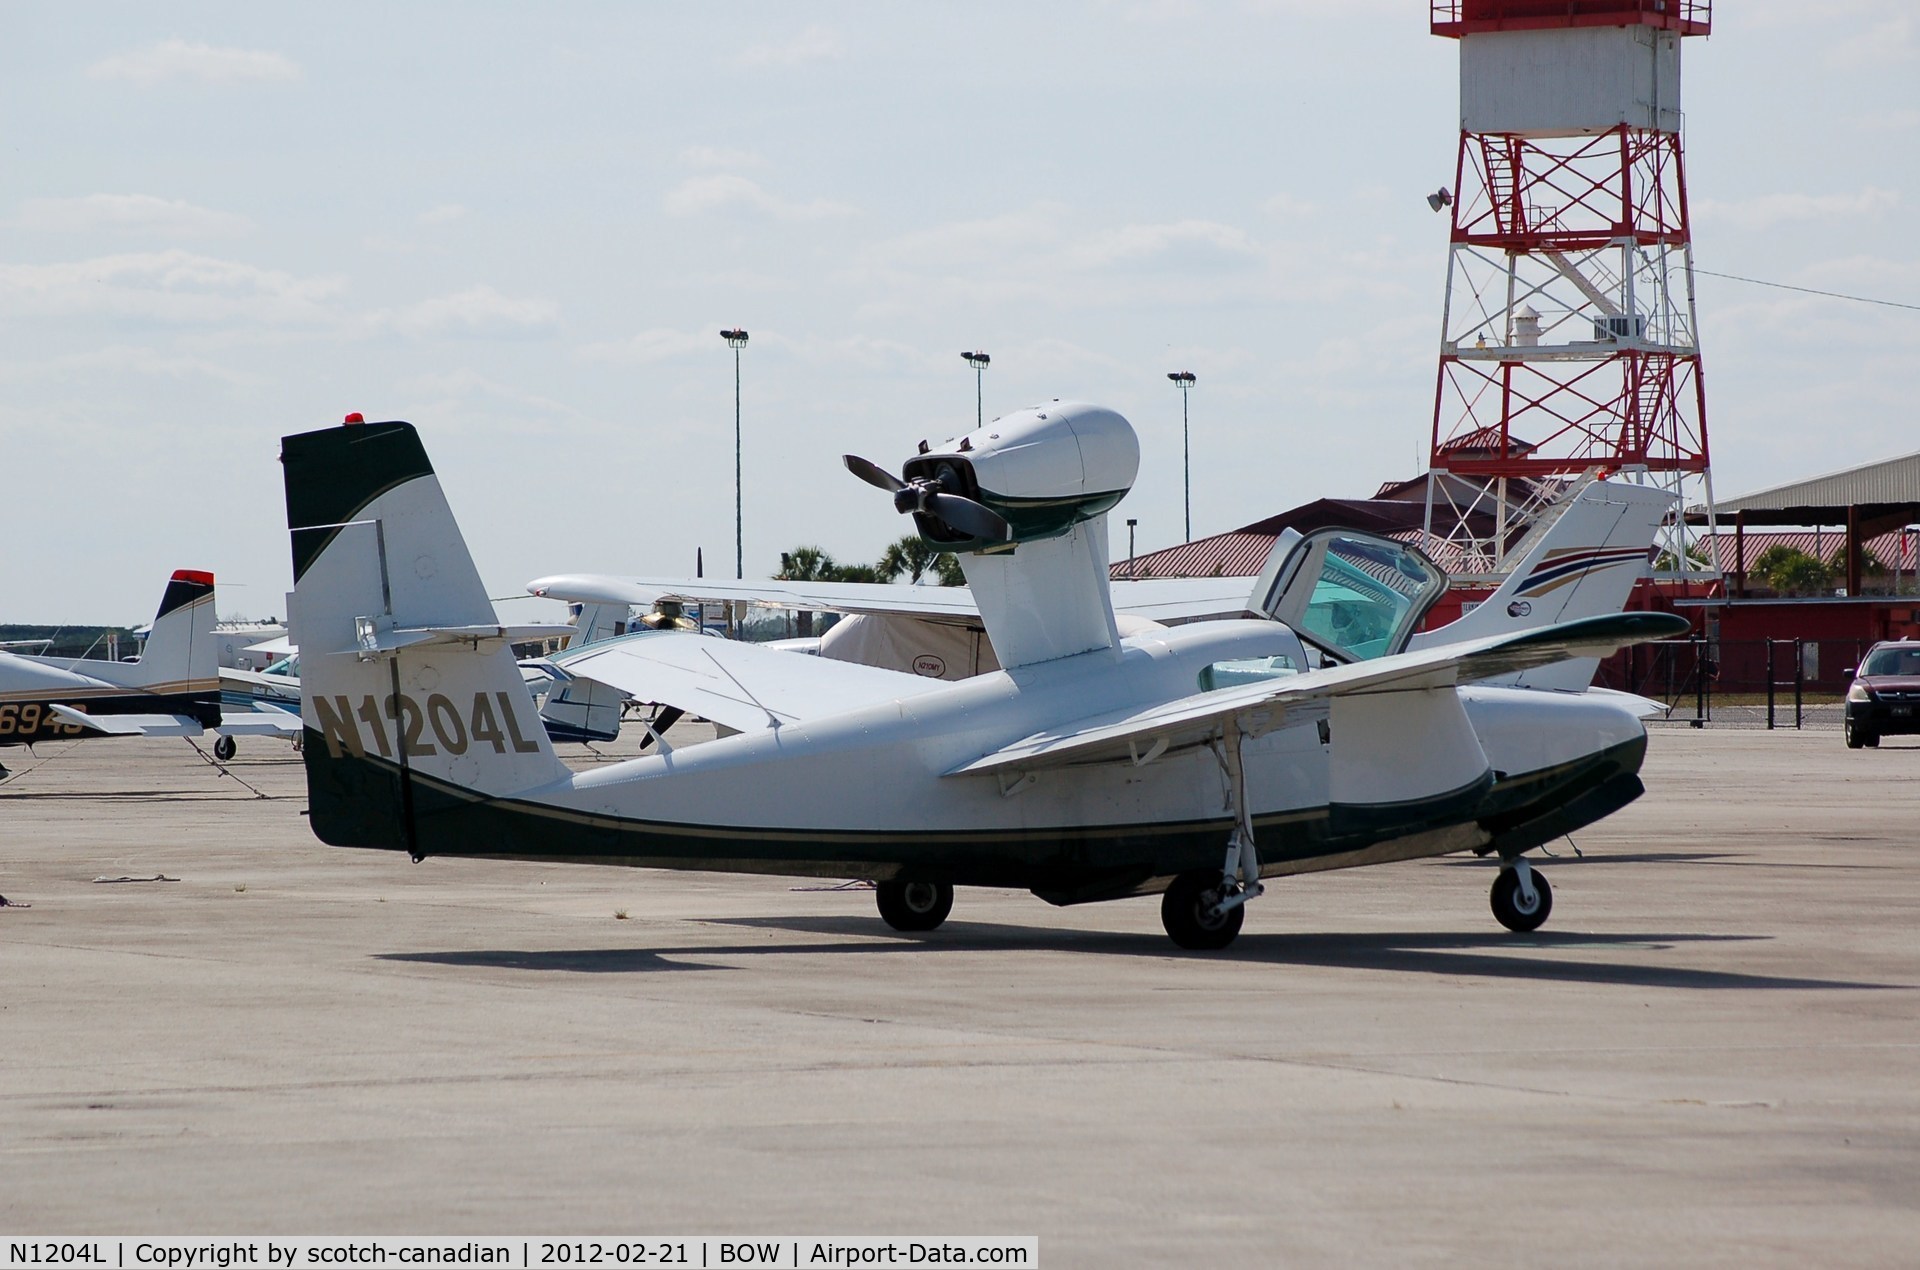 N1204L, 1975 Consolidated Aeronautics Inc. LAKE LA-4 C/N 709, 1975 Consolidated Aeronautics Inc. LAKE LA-4 N1204L at Bartow Municipal Airport, Bartow, FL